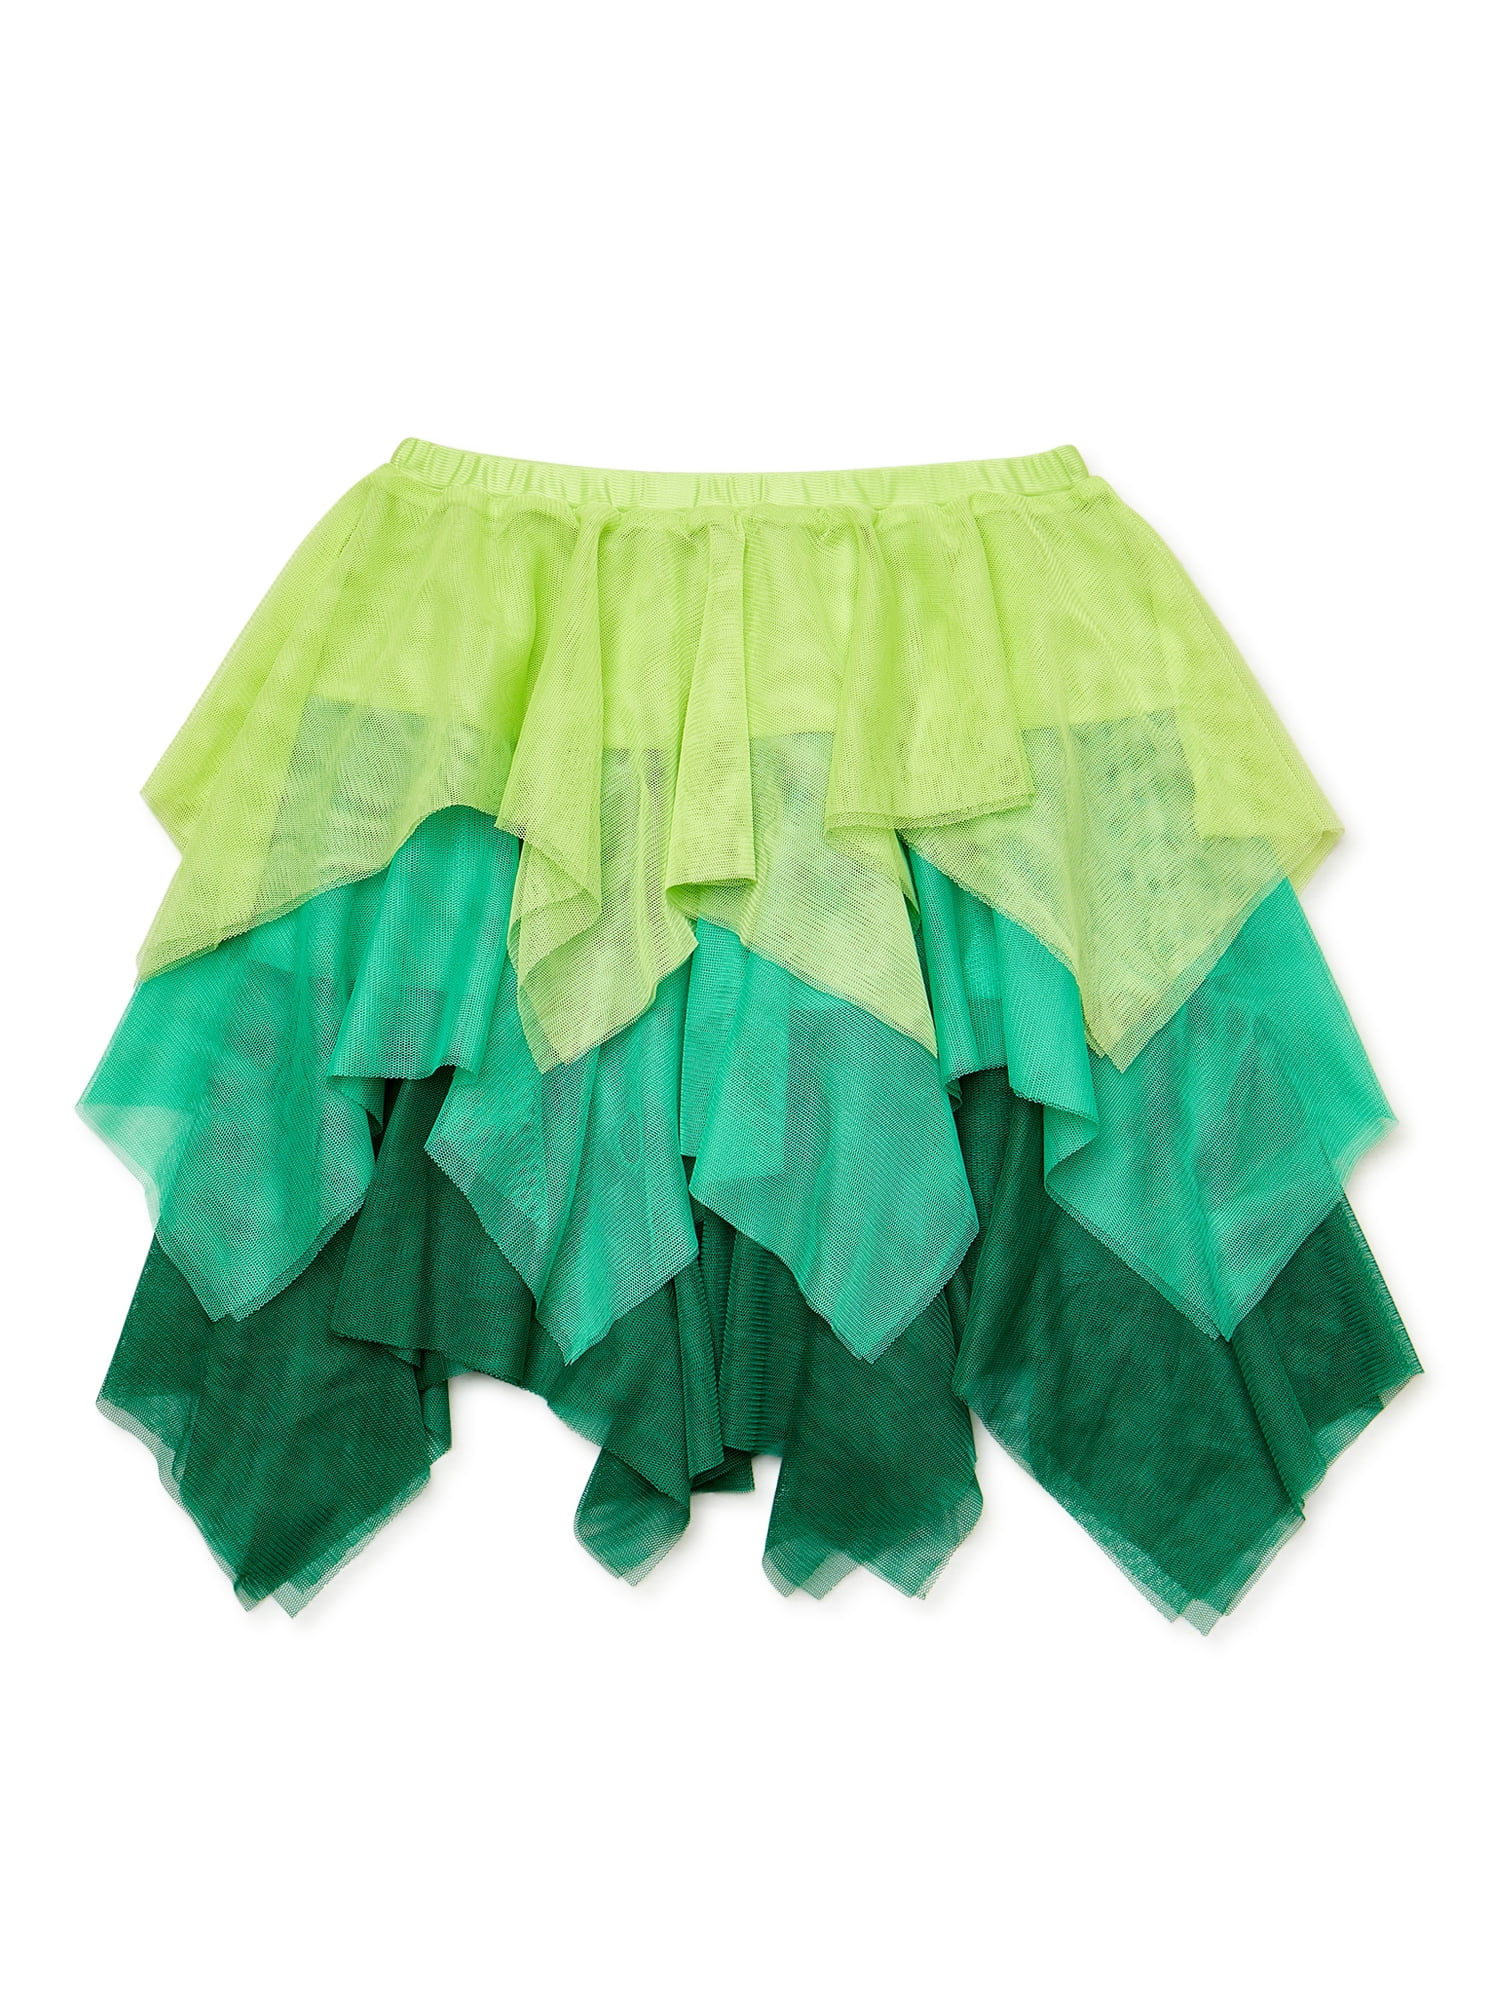 WAY TO CELEBRATE! Way To Celebrate Girls St. Patrick's Day Fairy Skirt, Sizes 4-18